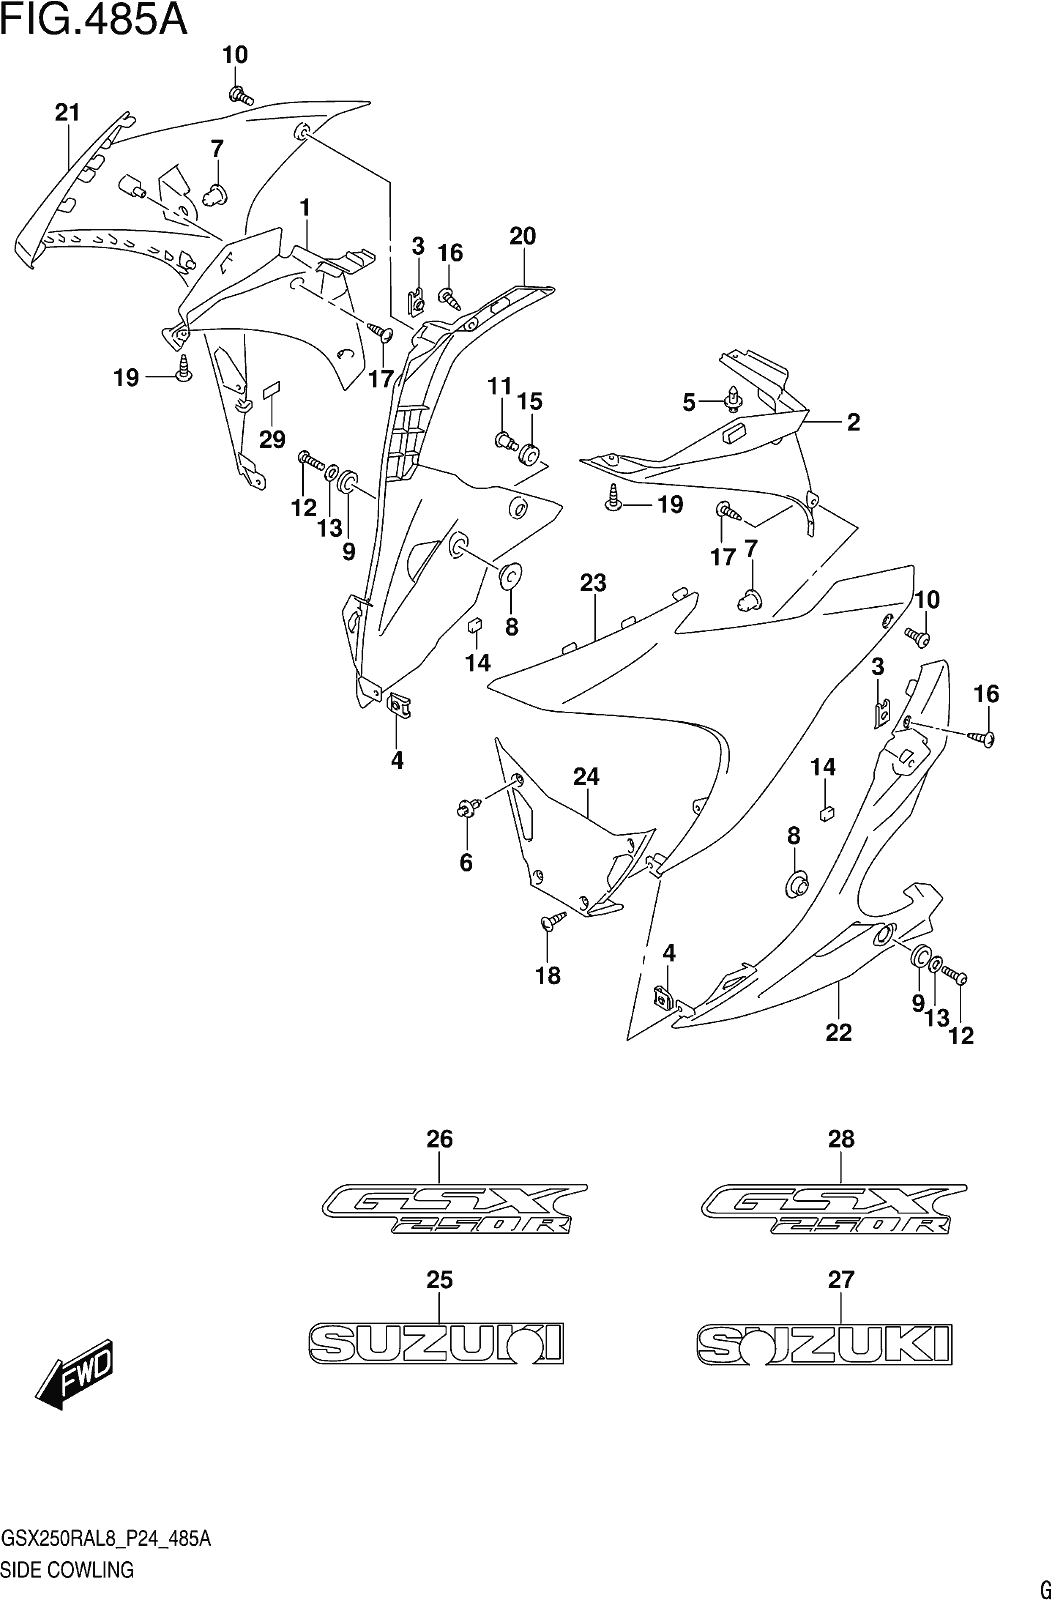 Fig.485a Side Cowling (gw250ral8 P24)